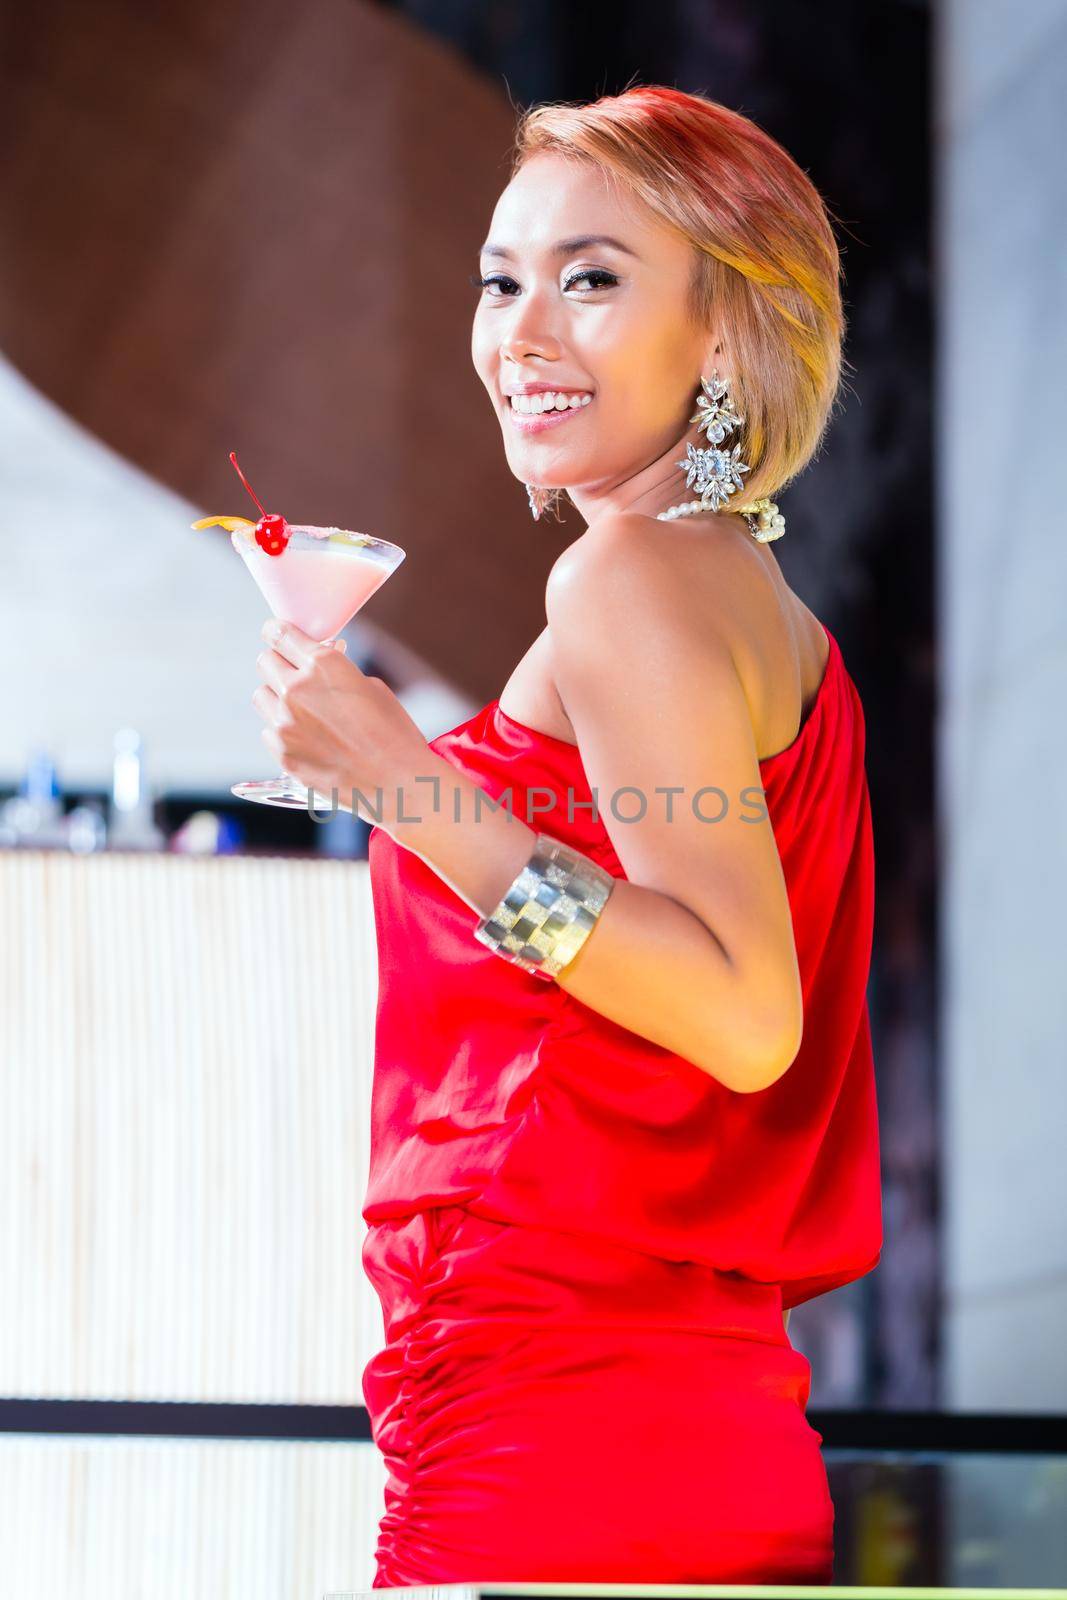 Asian woman drinking cocktails in fancy bar or club by Kzenon